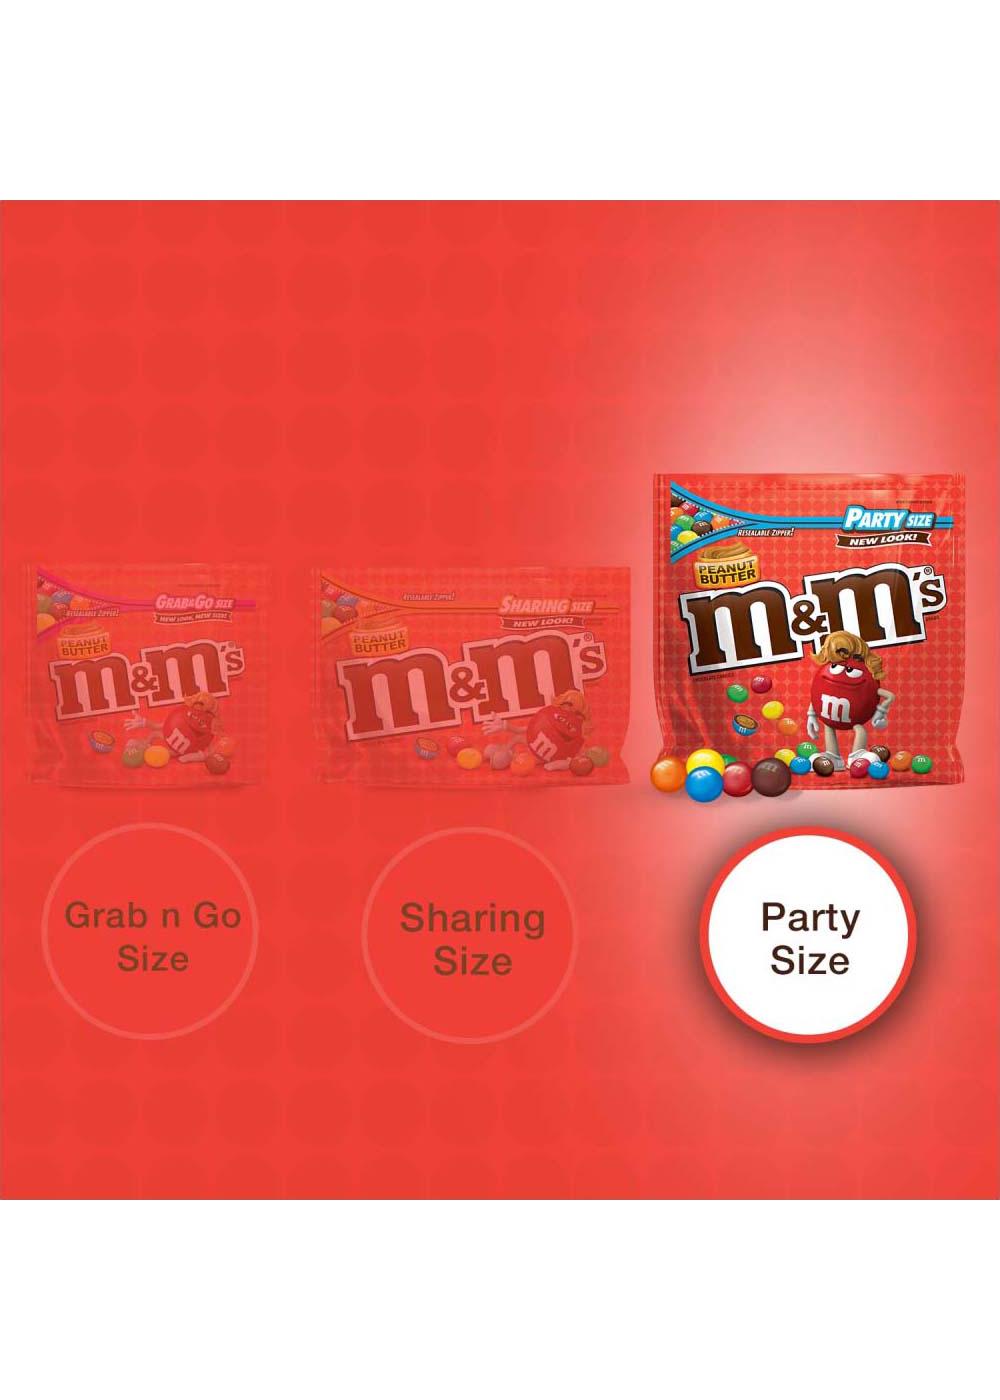 M&M'S Peanut Milk Chocolate Grab n Go Candy - Shop Candy at H-E-B